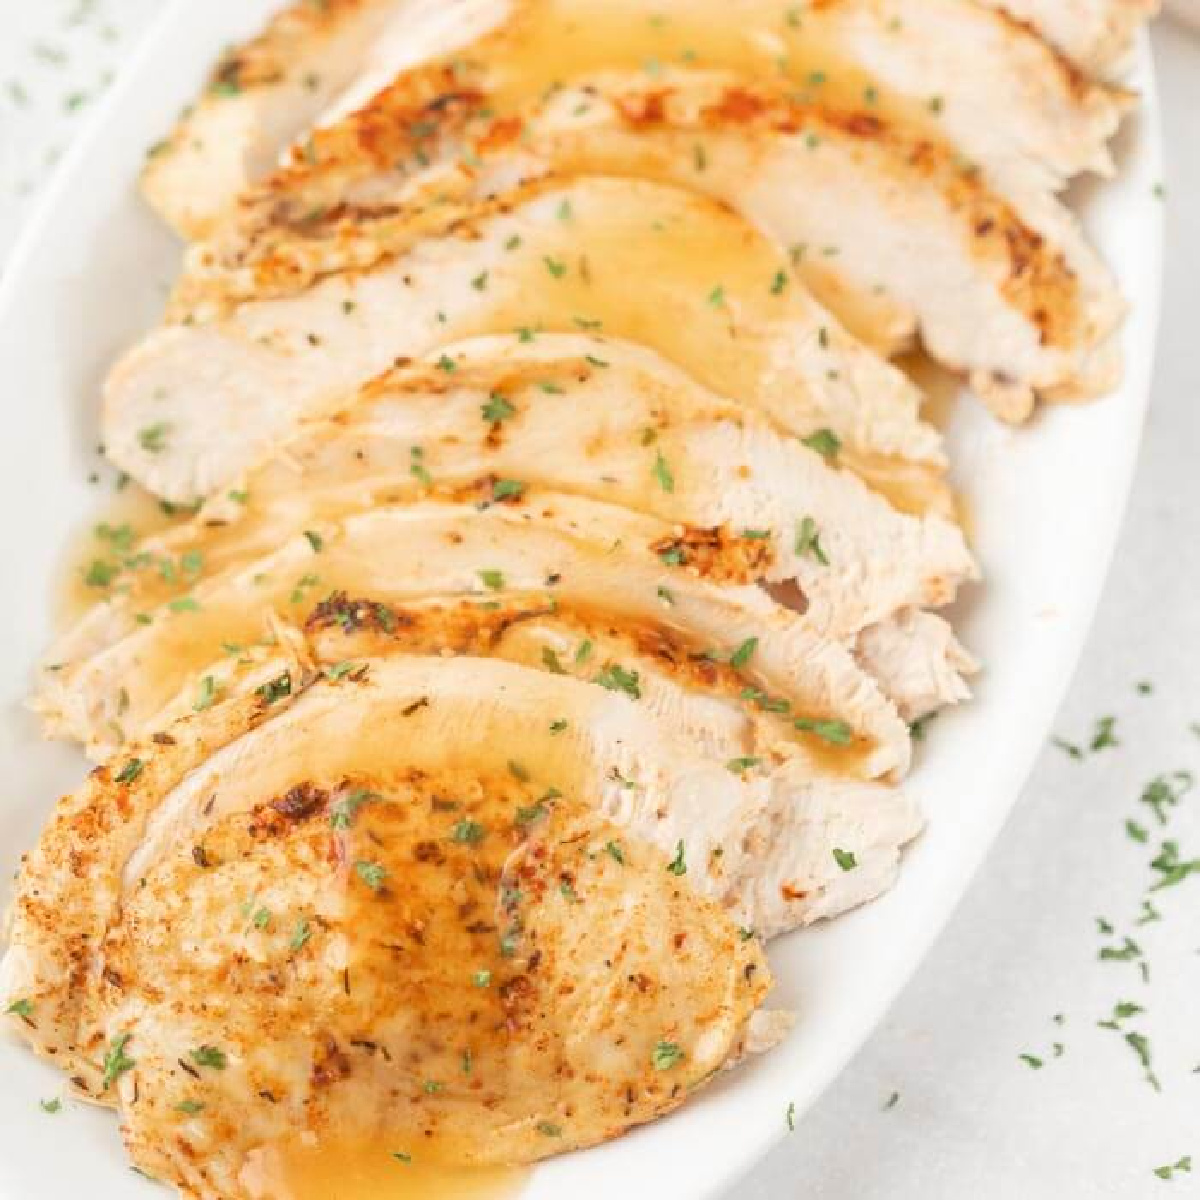 sliced turkey breast with gravy on platter